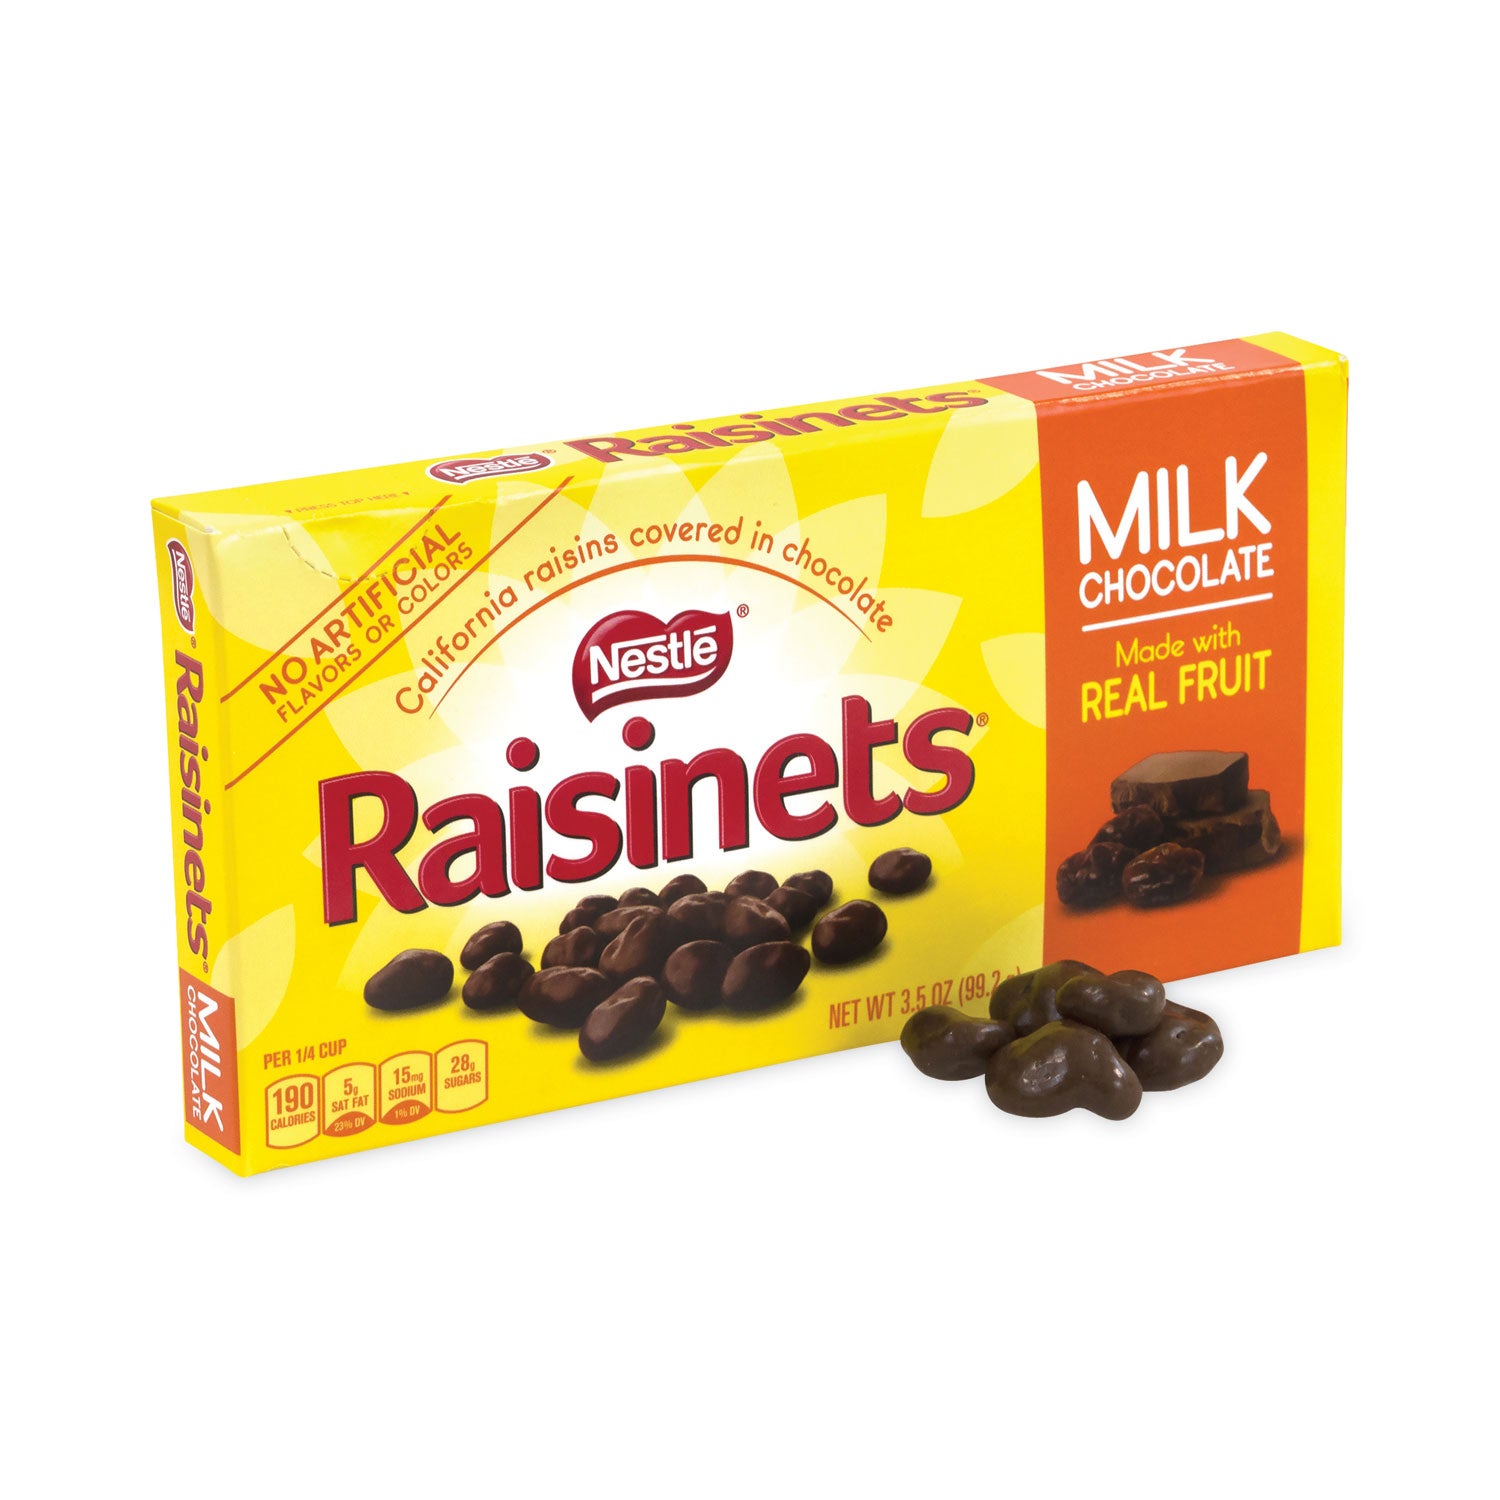 raisinets-milk-chocolate-candy-raisins-35-oz-box-15-boxes-carton-ships-in-1-3-business-days_grr20902540 - 2